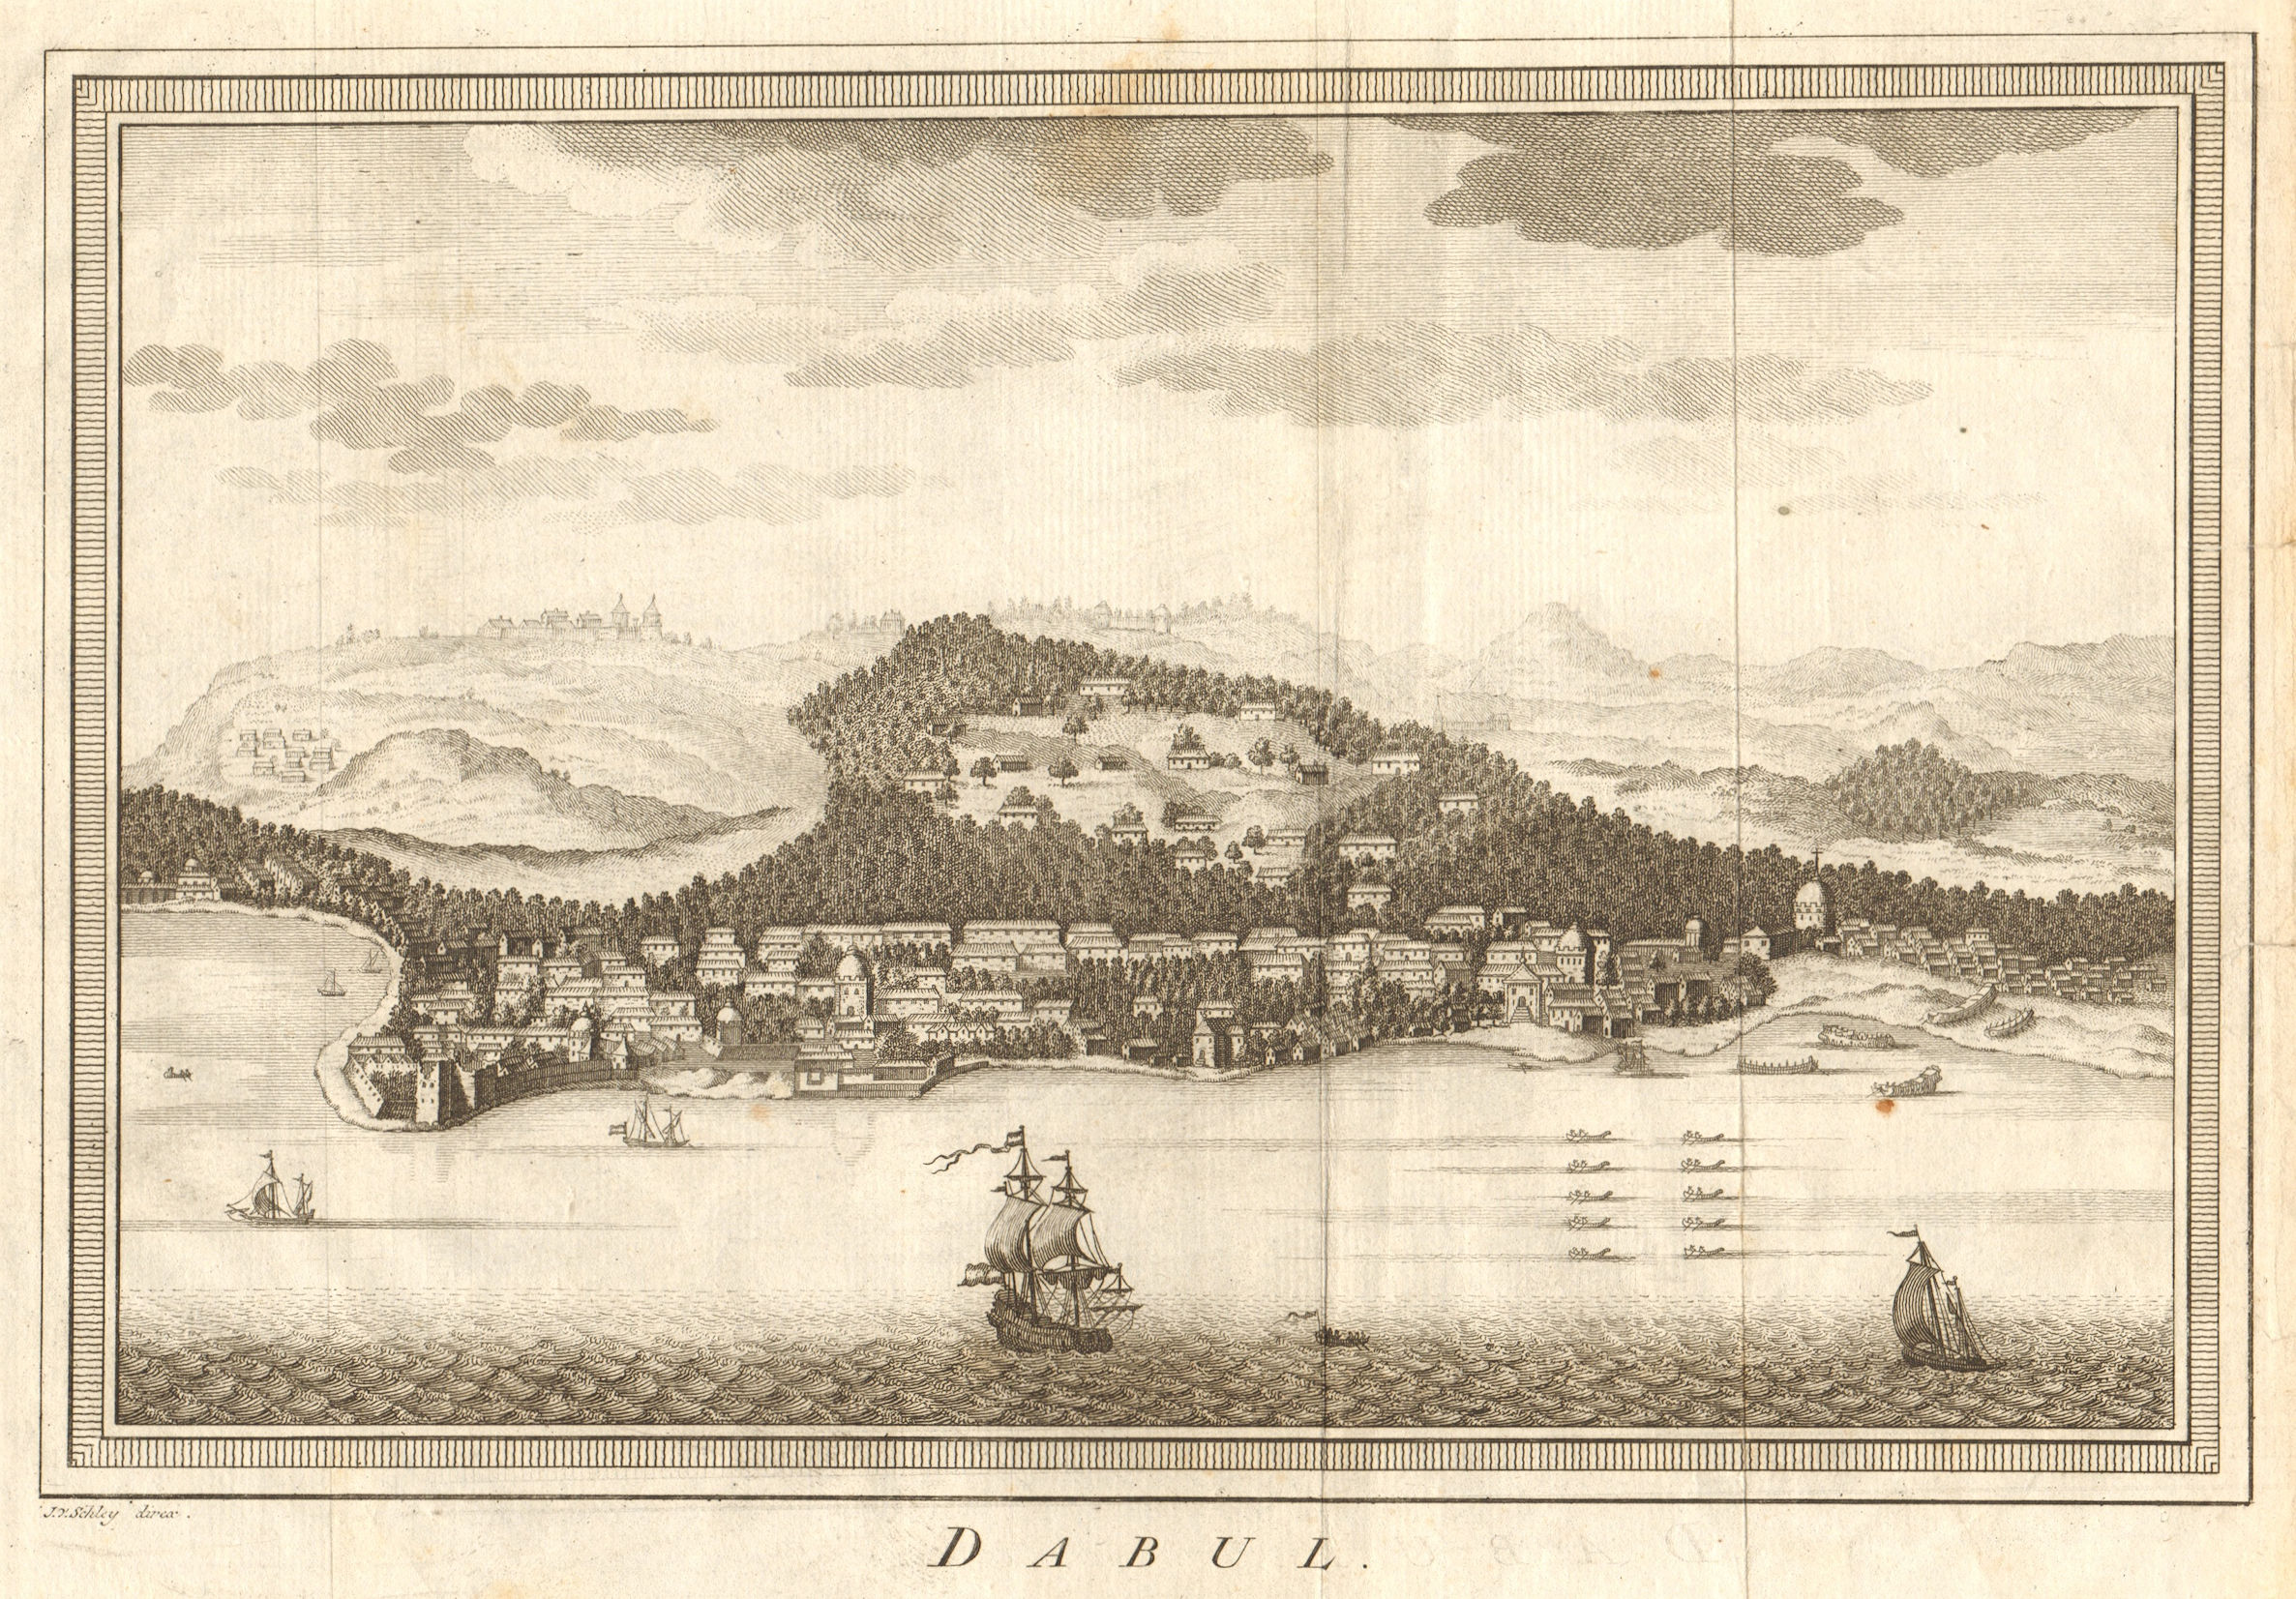 Associate Product 'Dabul'. View of Dabhol, Ratnagiri district, Maharashtra, India. SCHLEY 1755